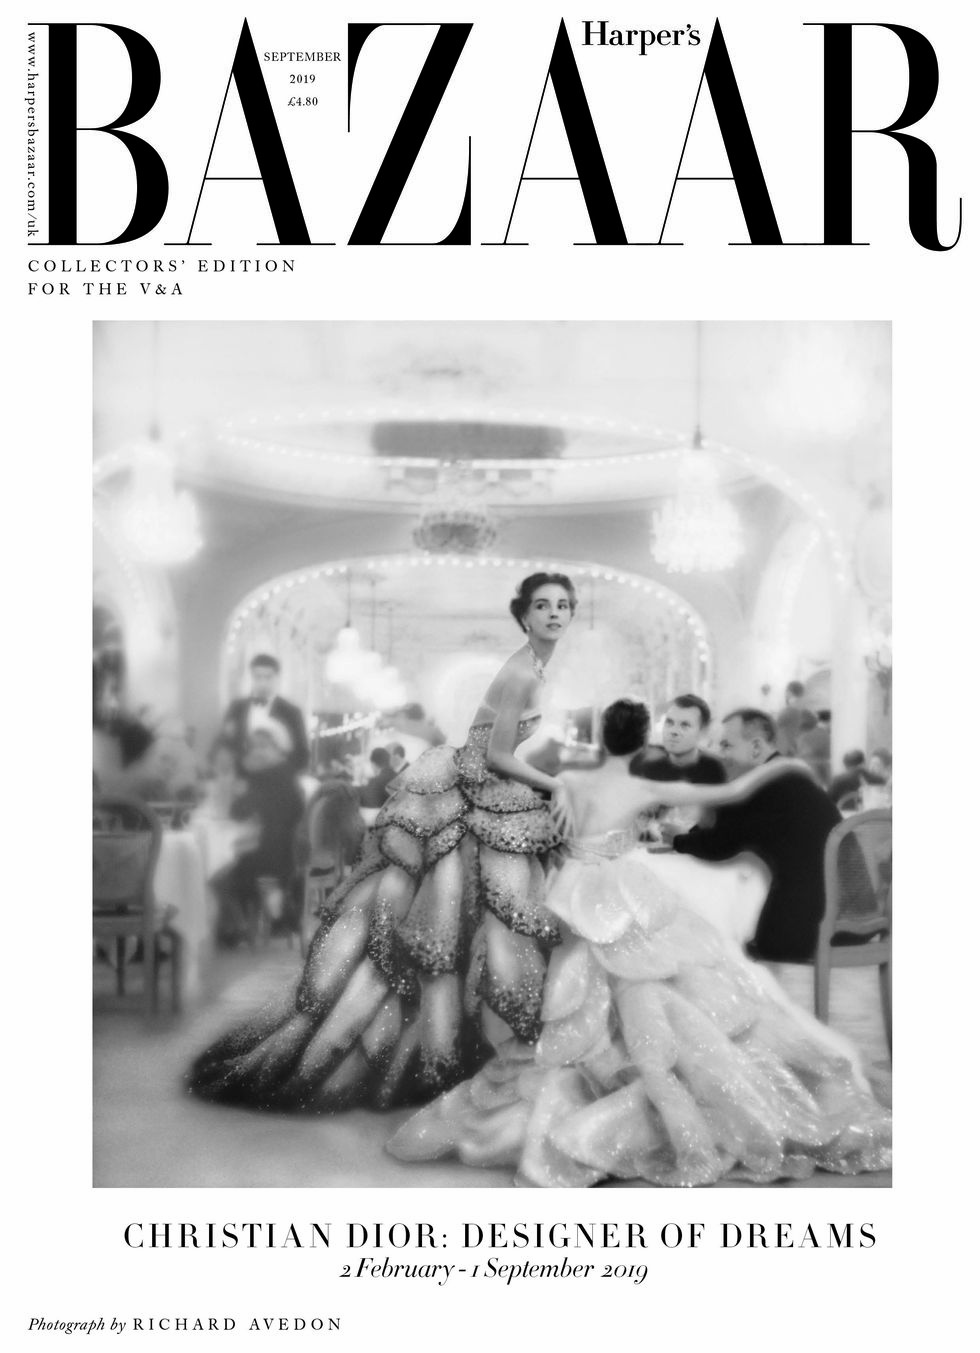 Dior Designer of Dreams Harper's Bazaar September issue